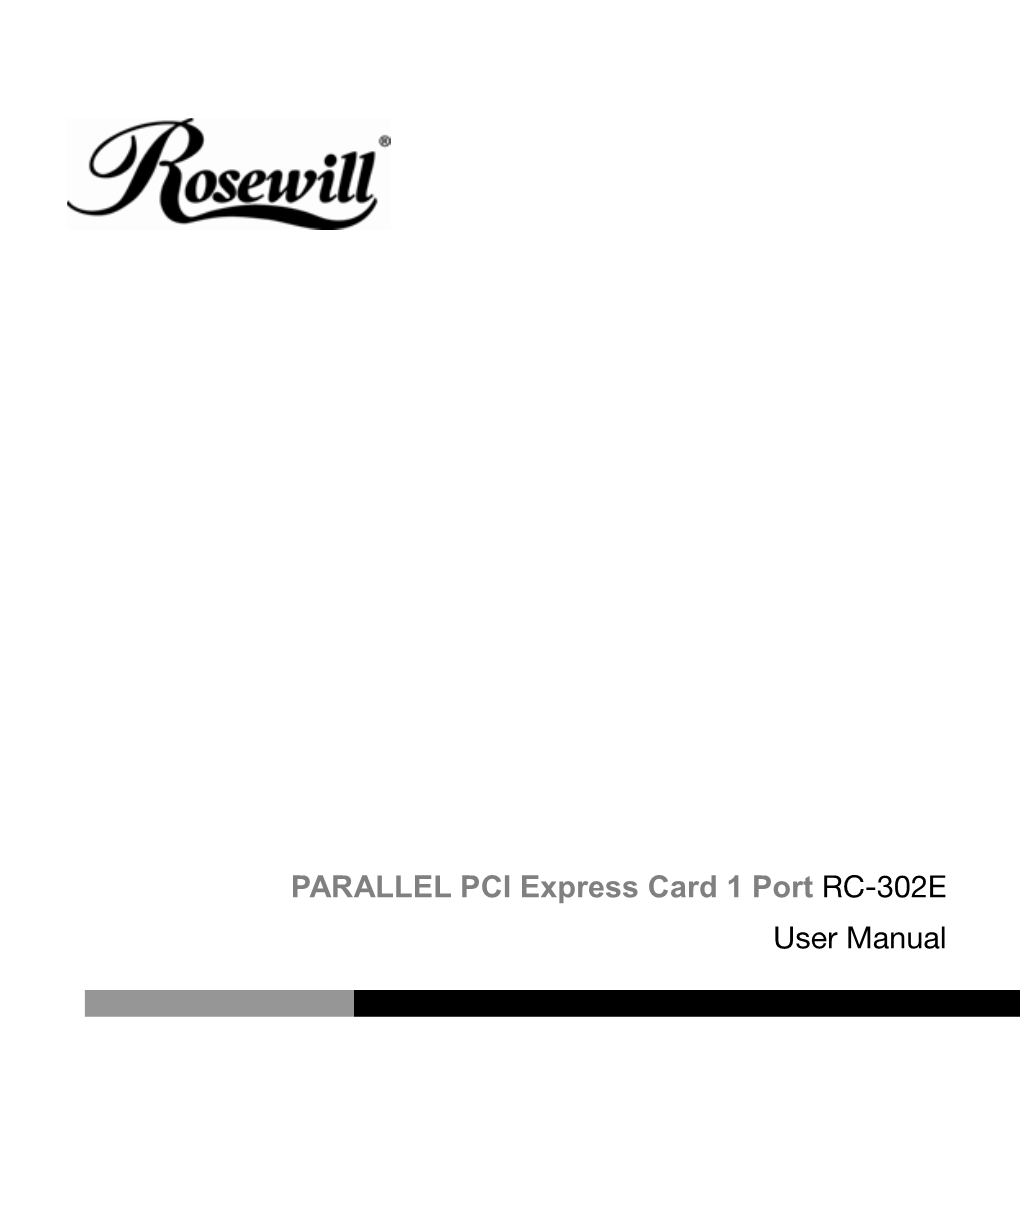 PARALLEL PCI Express Card 1 Port RC-302E User Manual